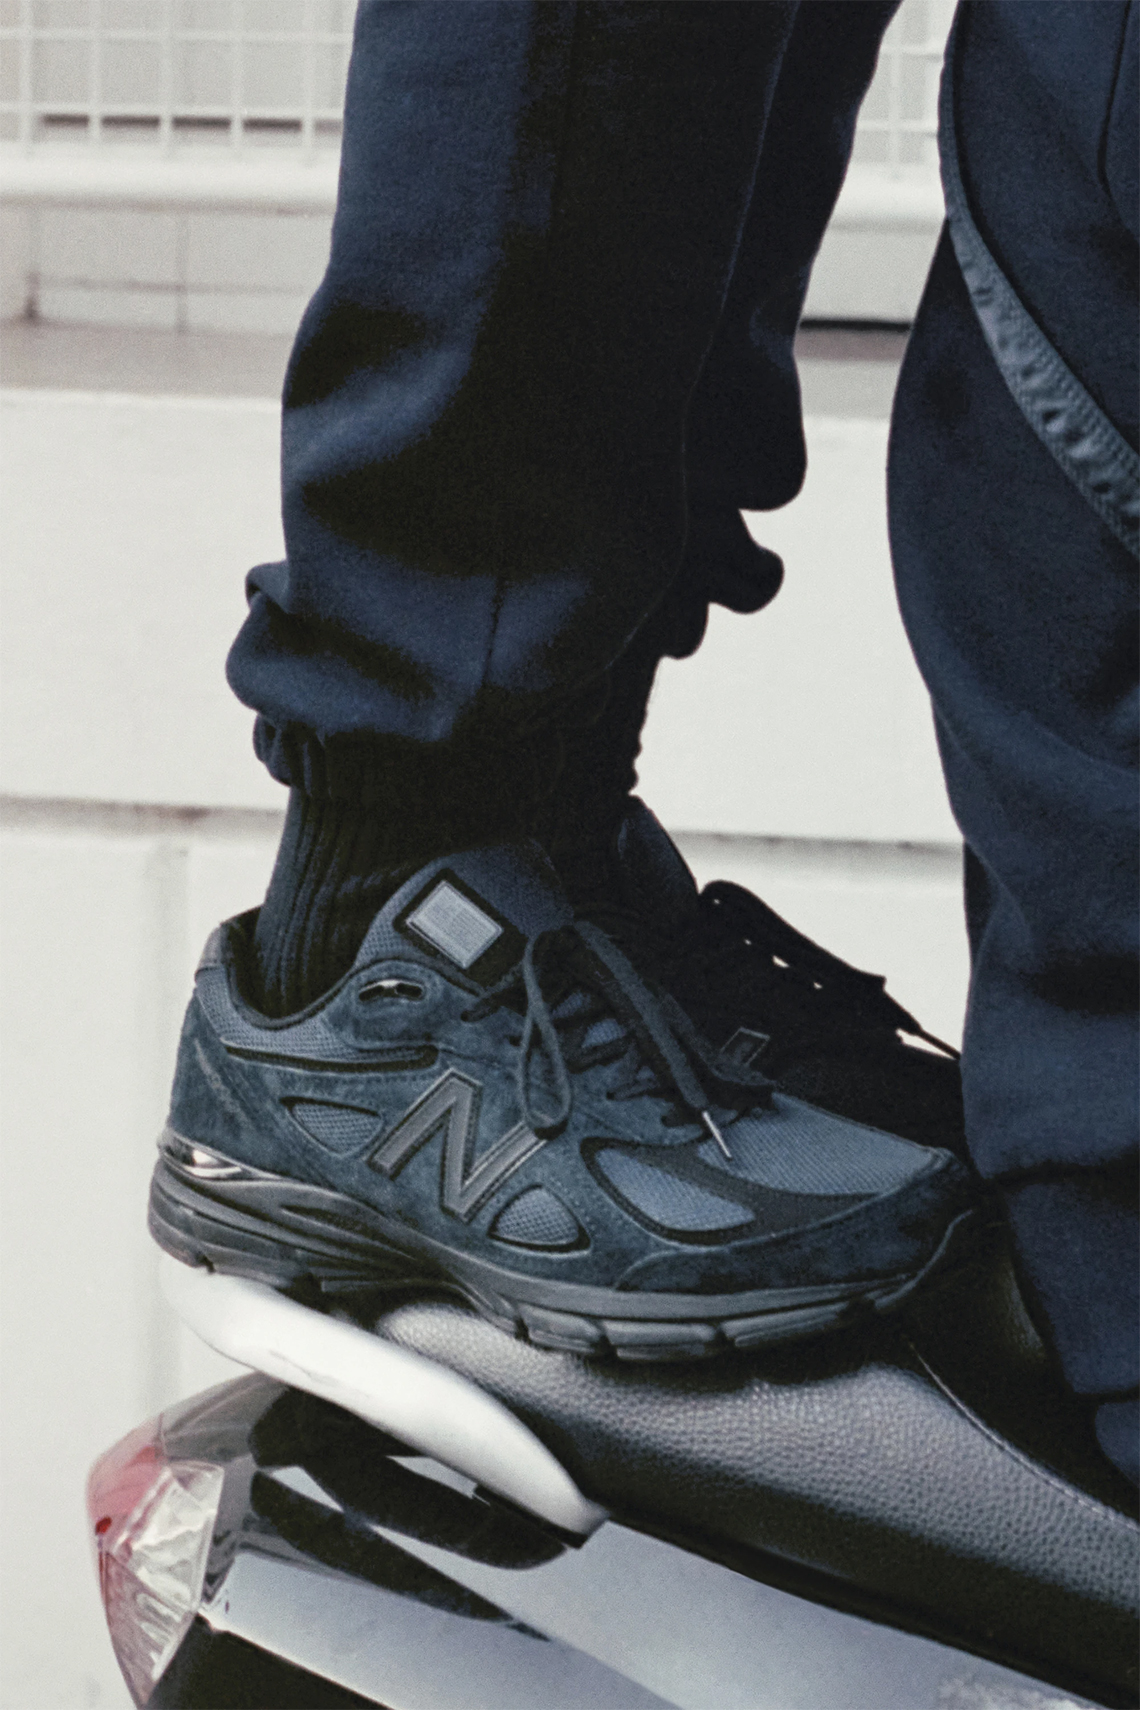 JJJJound New Balance 990v4 Navy Release Date | SneakerNews.com